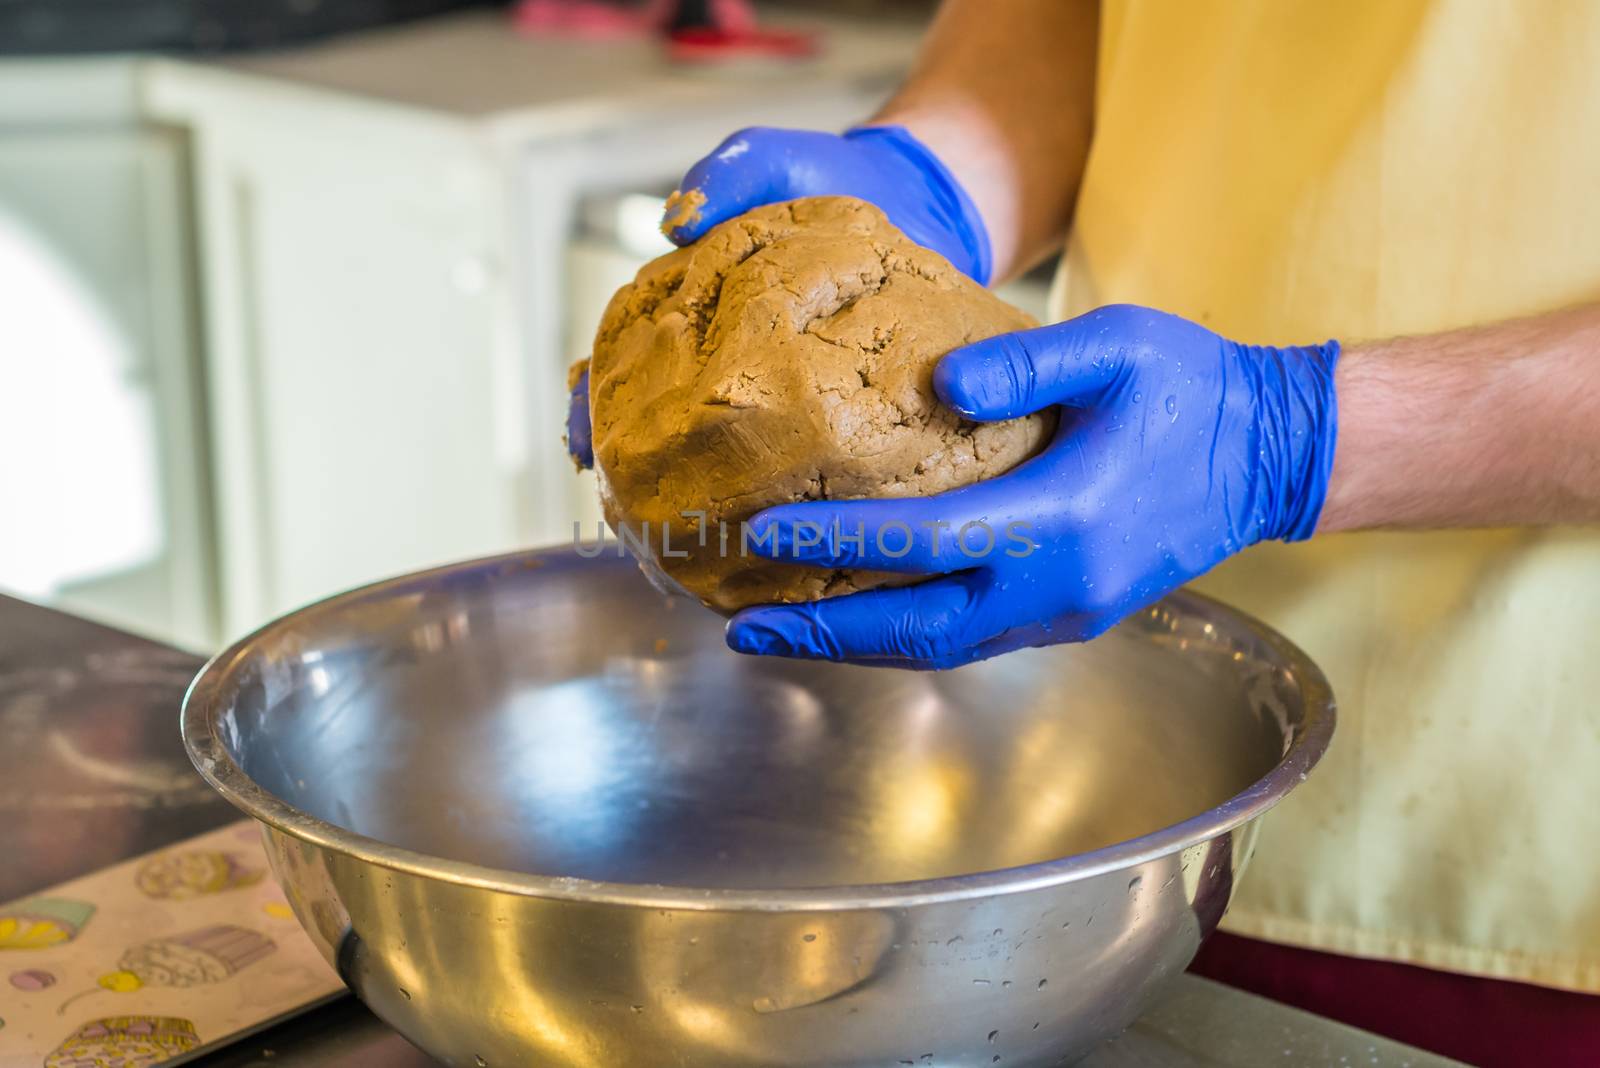 Hands knead dough with gloves by okskukuruza